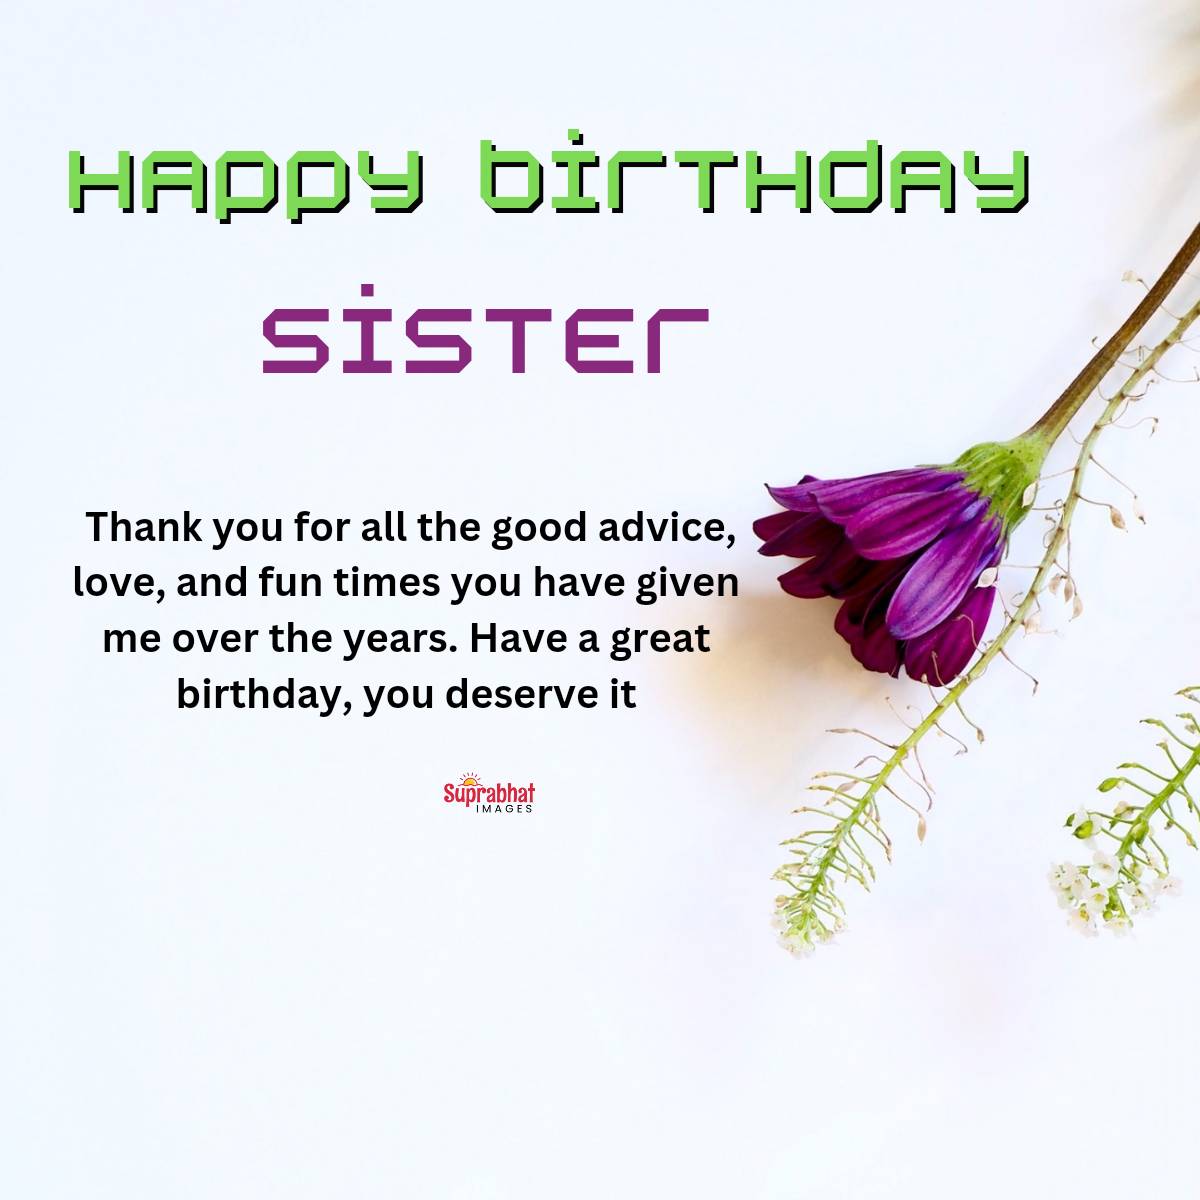 Happy Birthday Sister: A Sibling's Shining Star